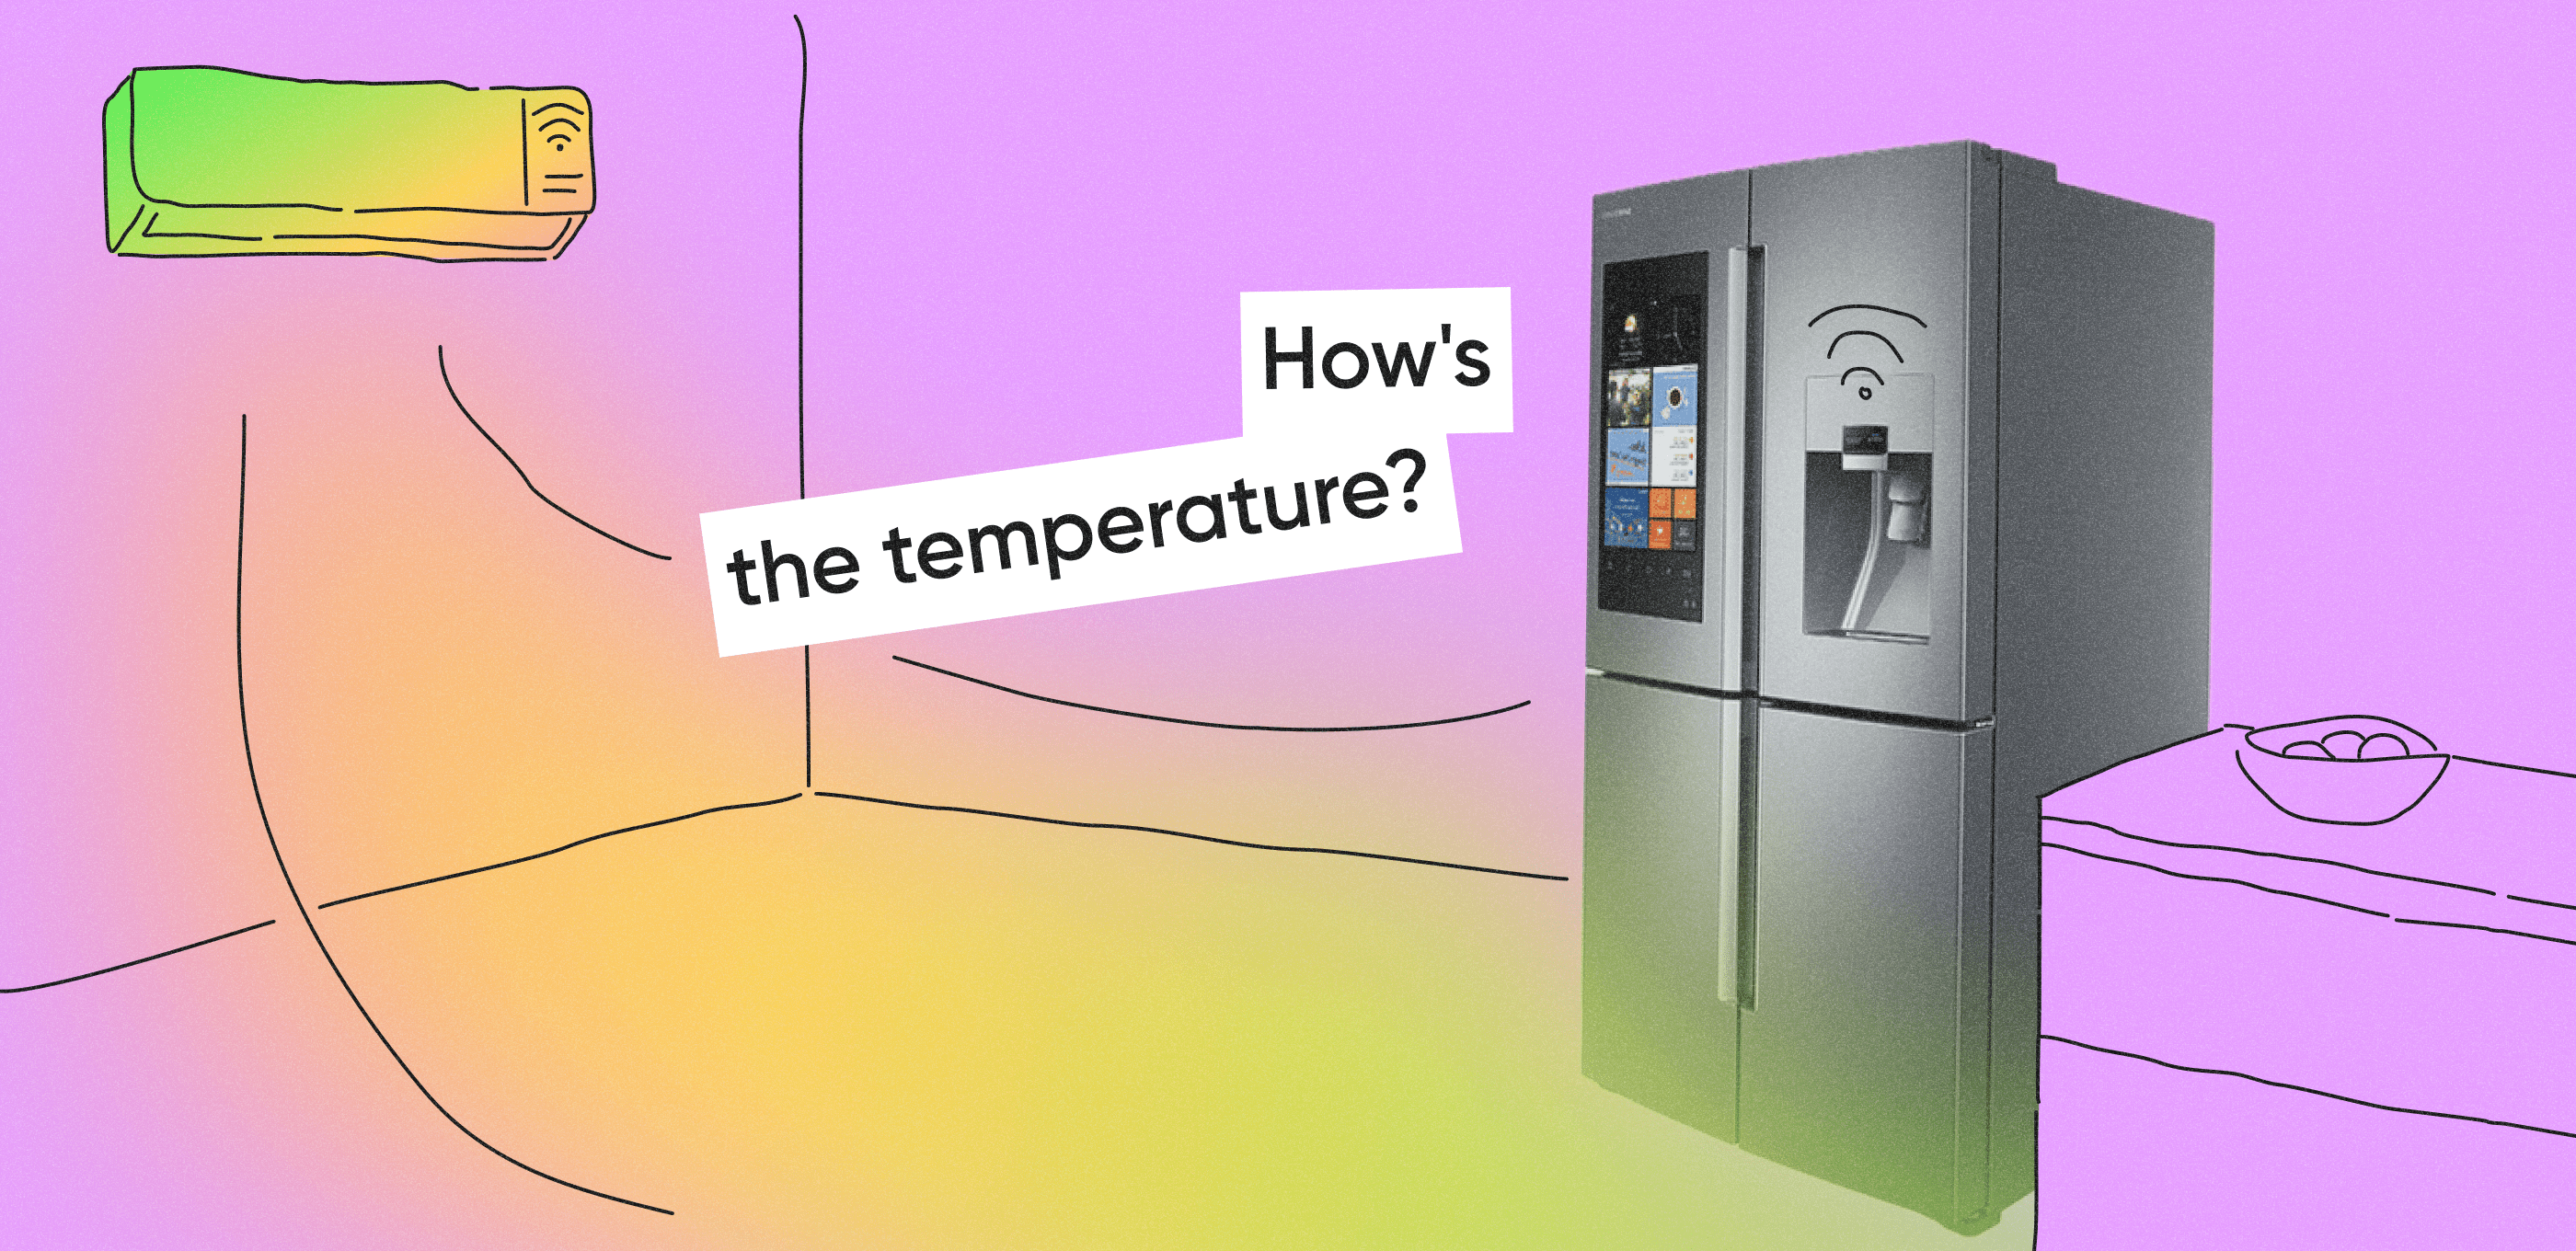 IoT fridge and AC unit having a friendly chat